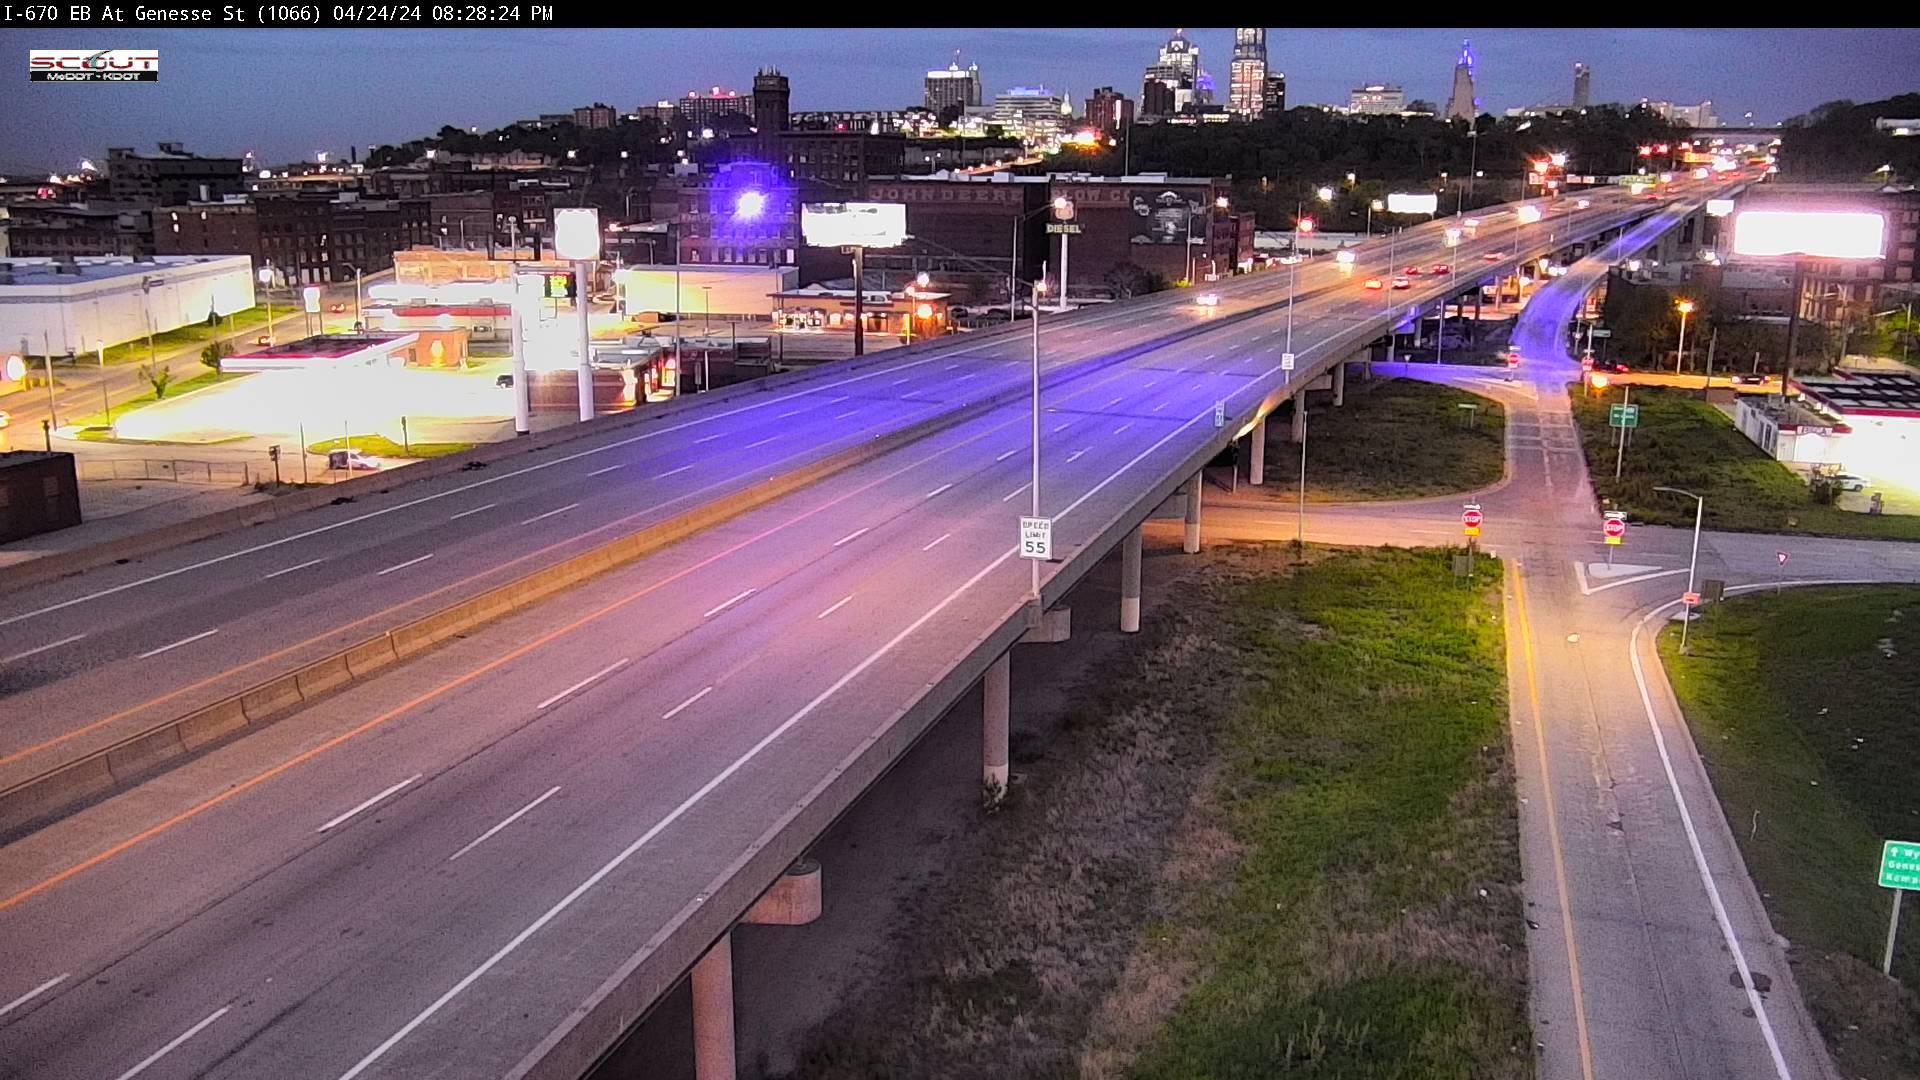 Kansas City: I-670 E @ Genesse Street Traffic Camera